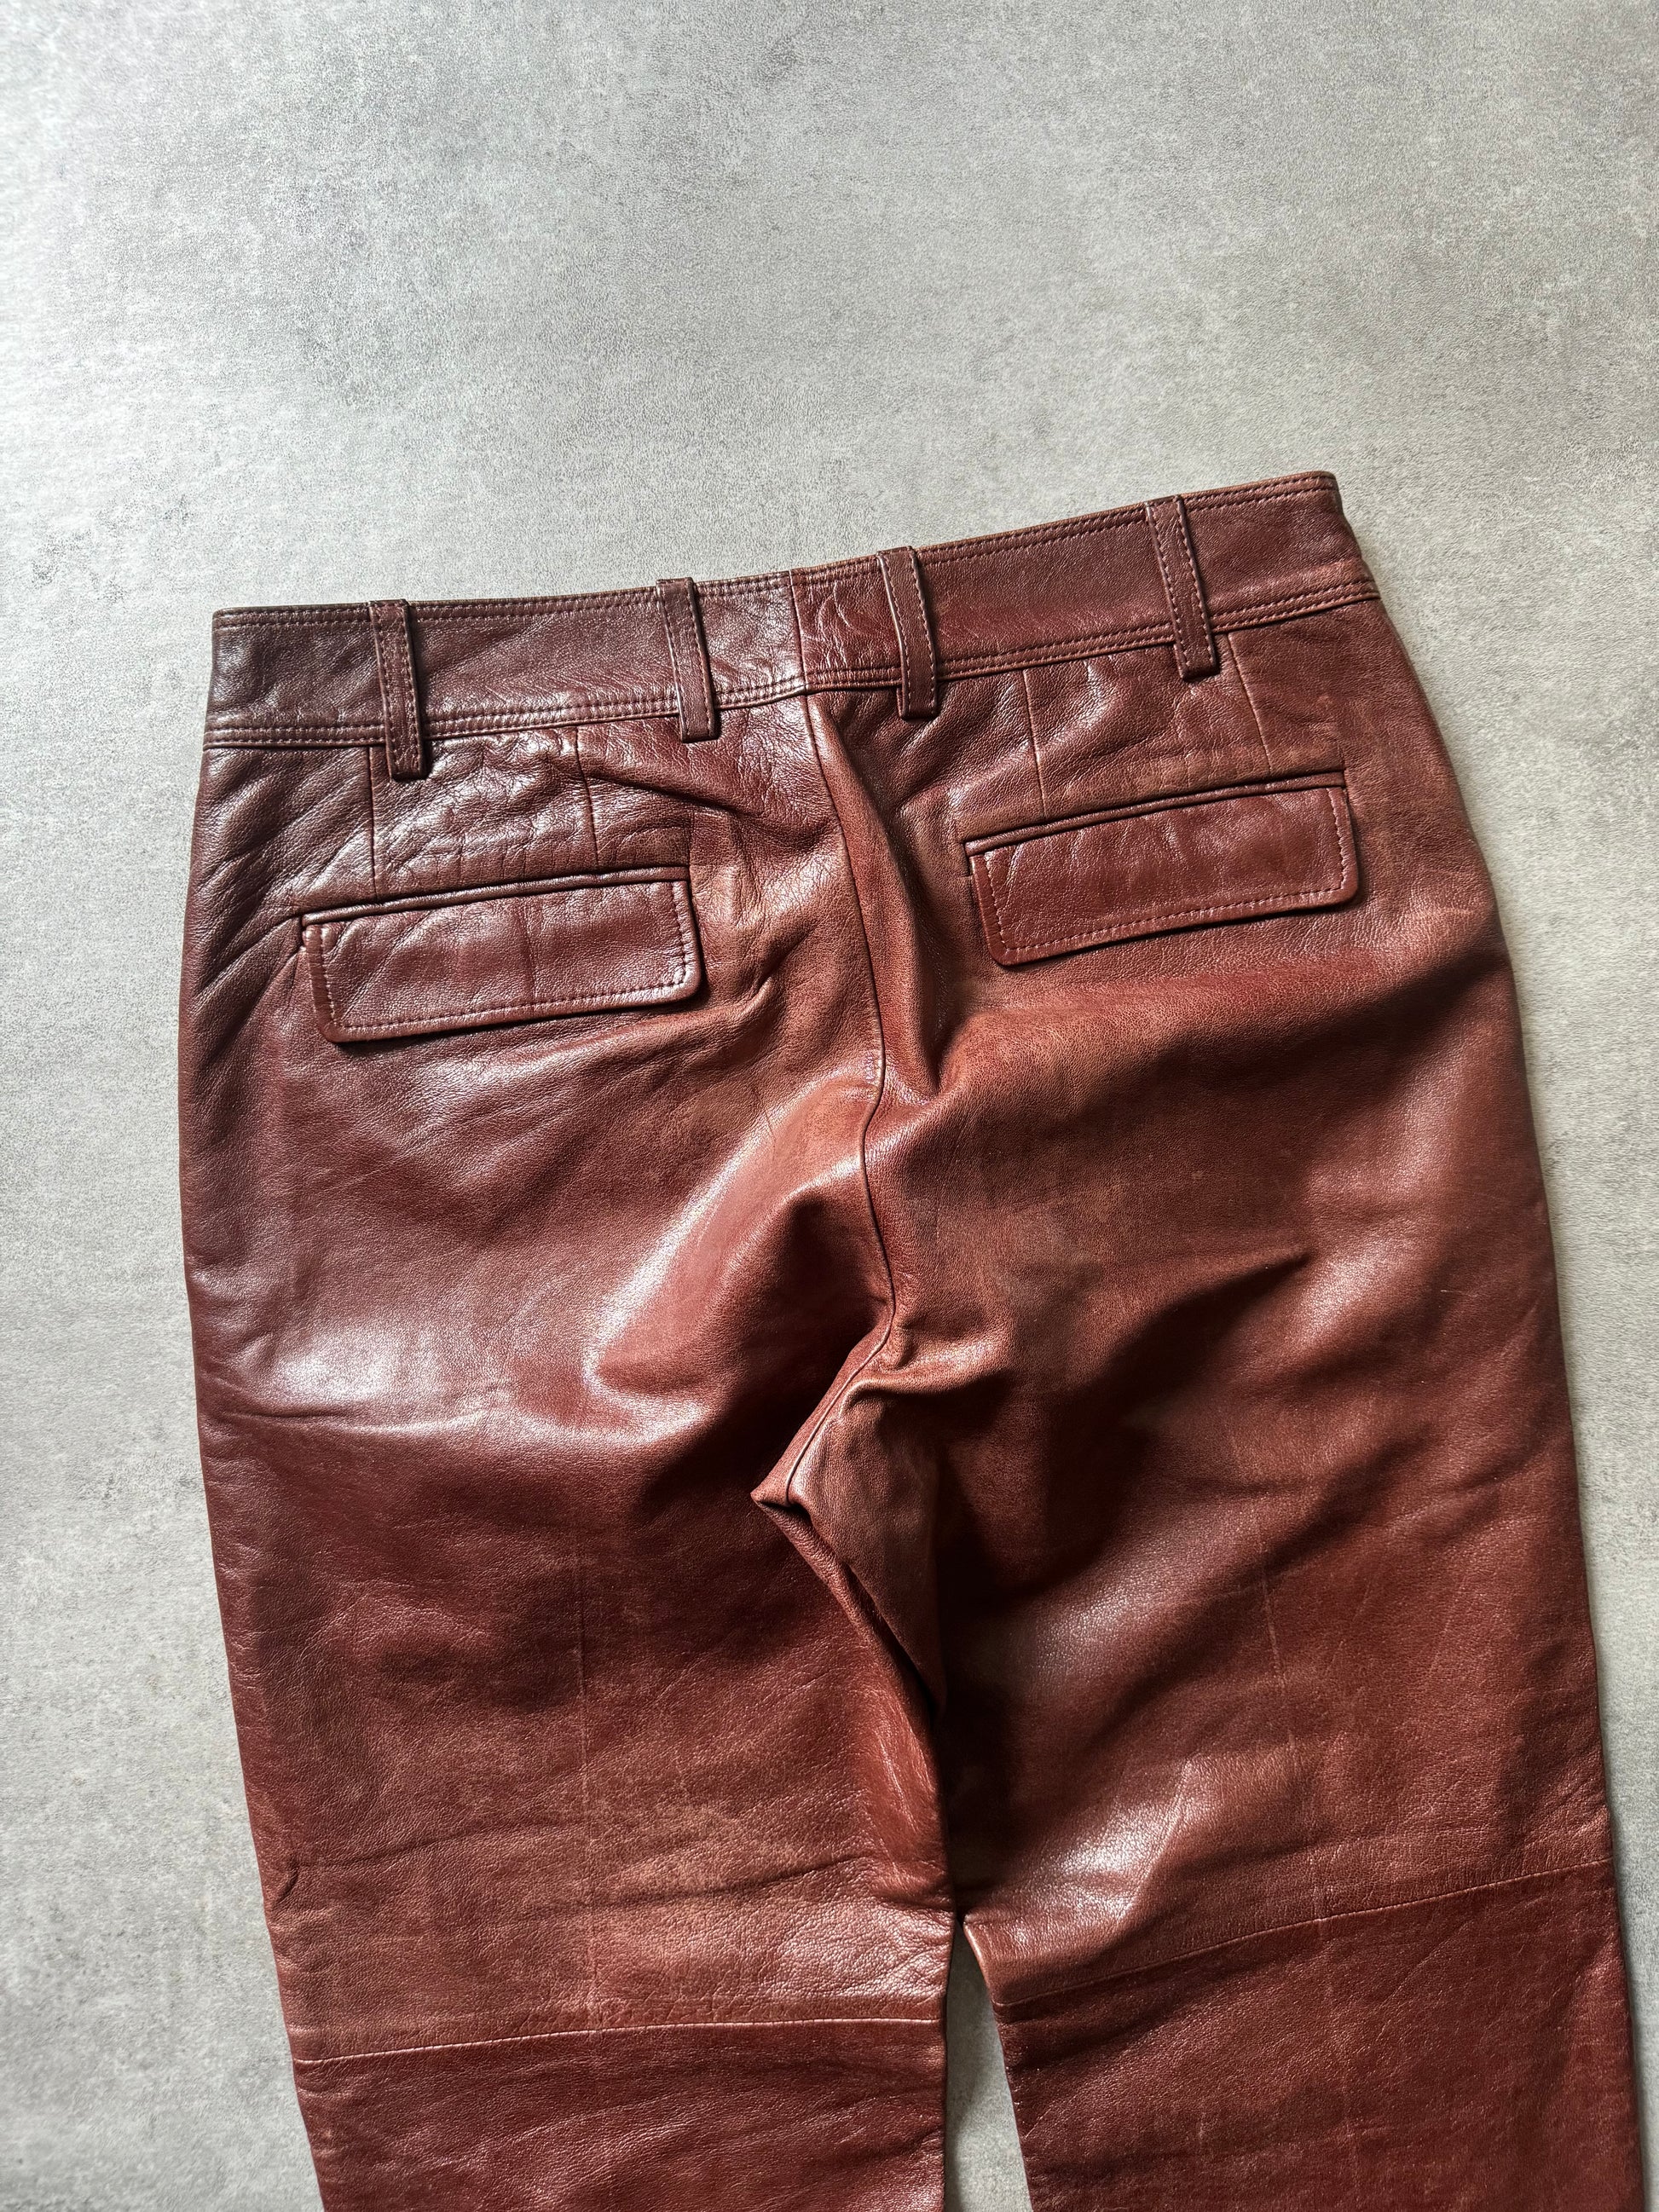 Dries Van Noten Brown Leather Pants  (M) - 6